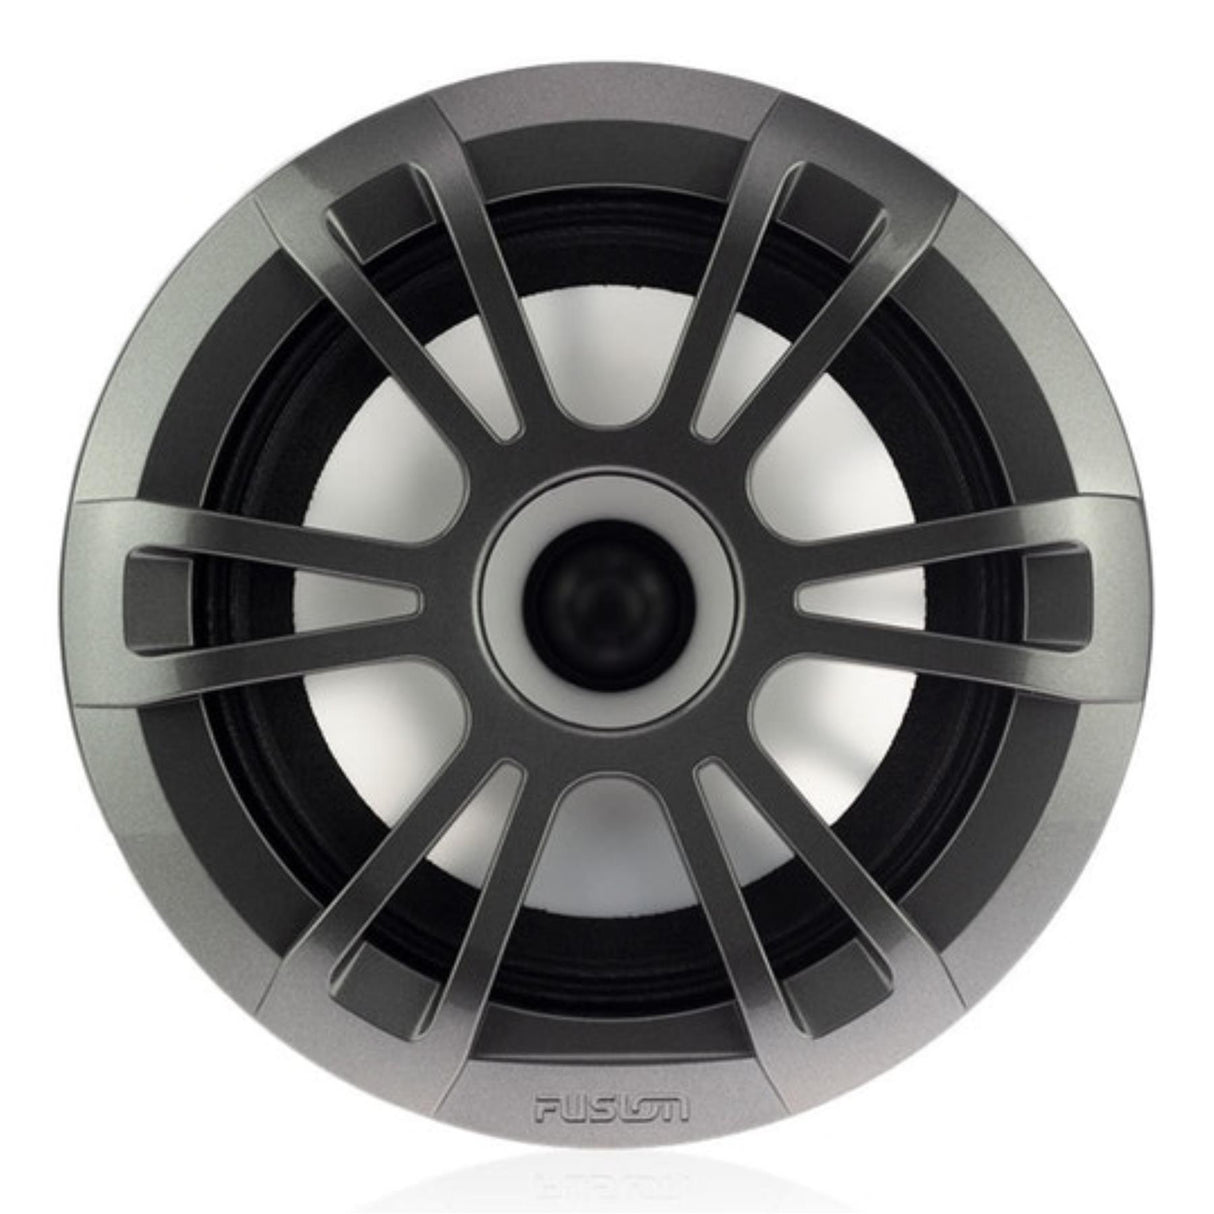 Fusion EL-FL651SPG 6.5" LED Shallow Mount Speakers 80W - Sports Grey - PROTEUS MARINE STORE